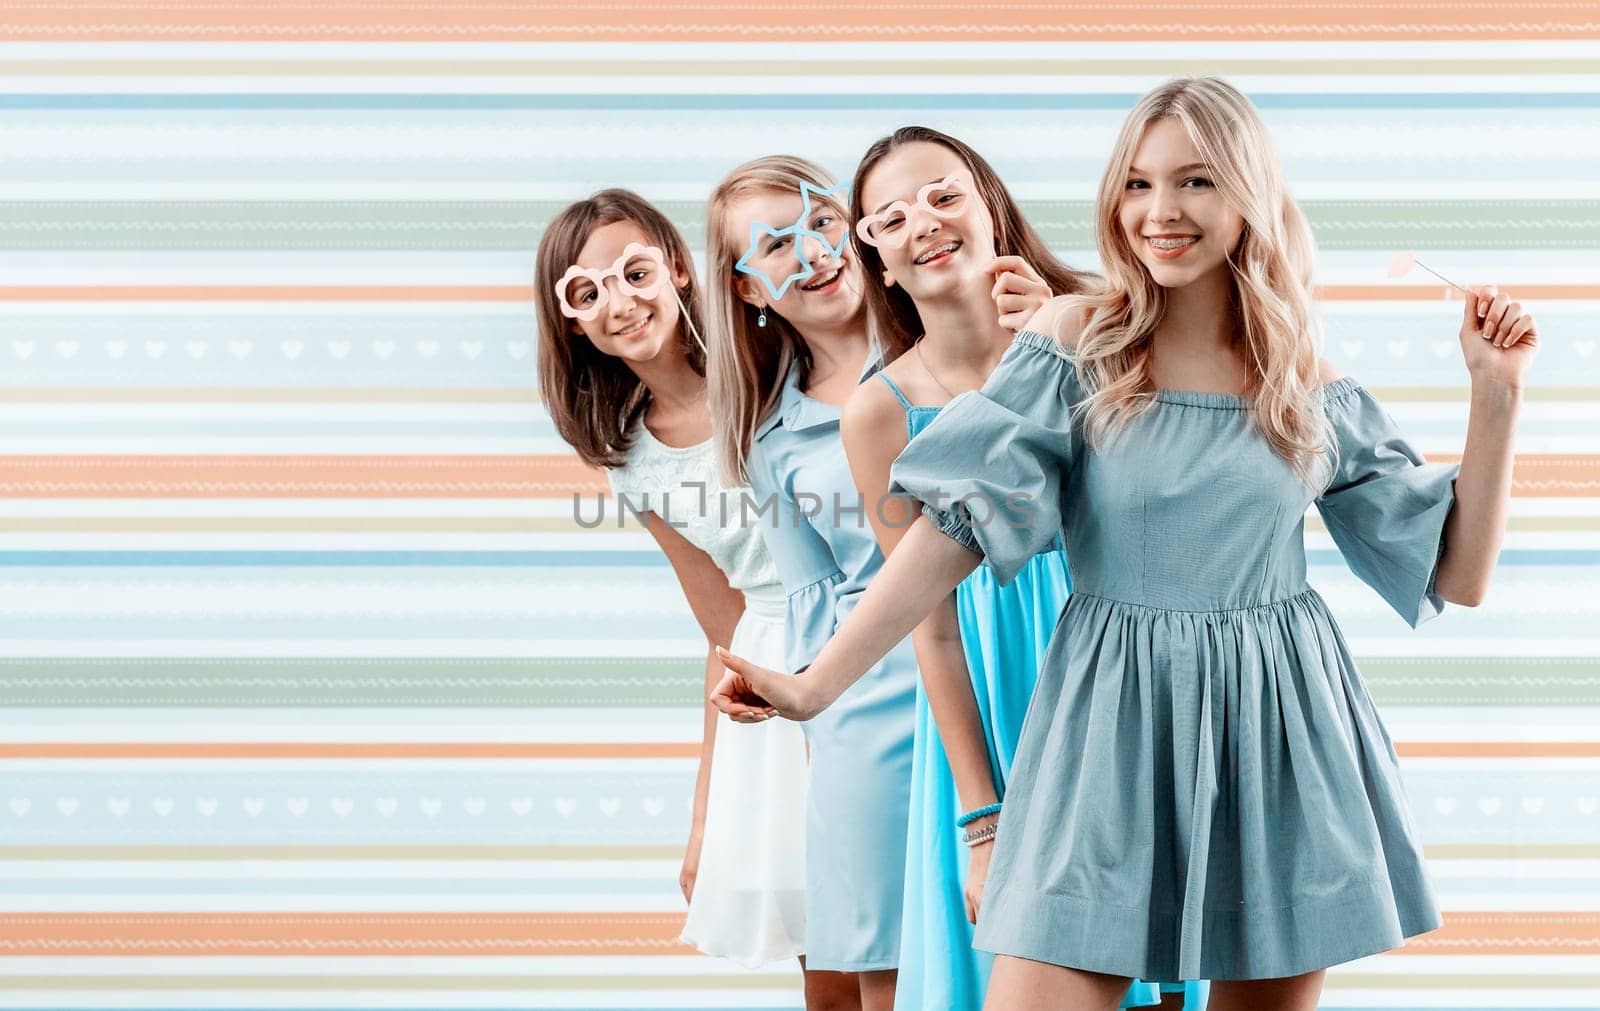 Smiling teenage girls posing emotionally on striped background